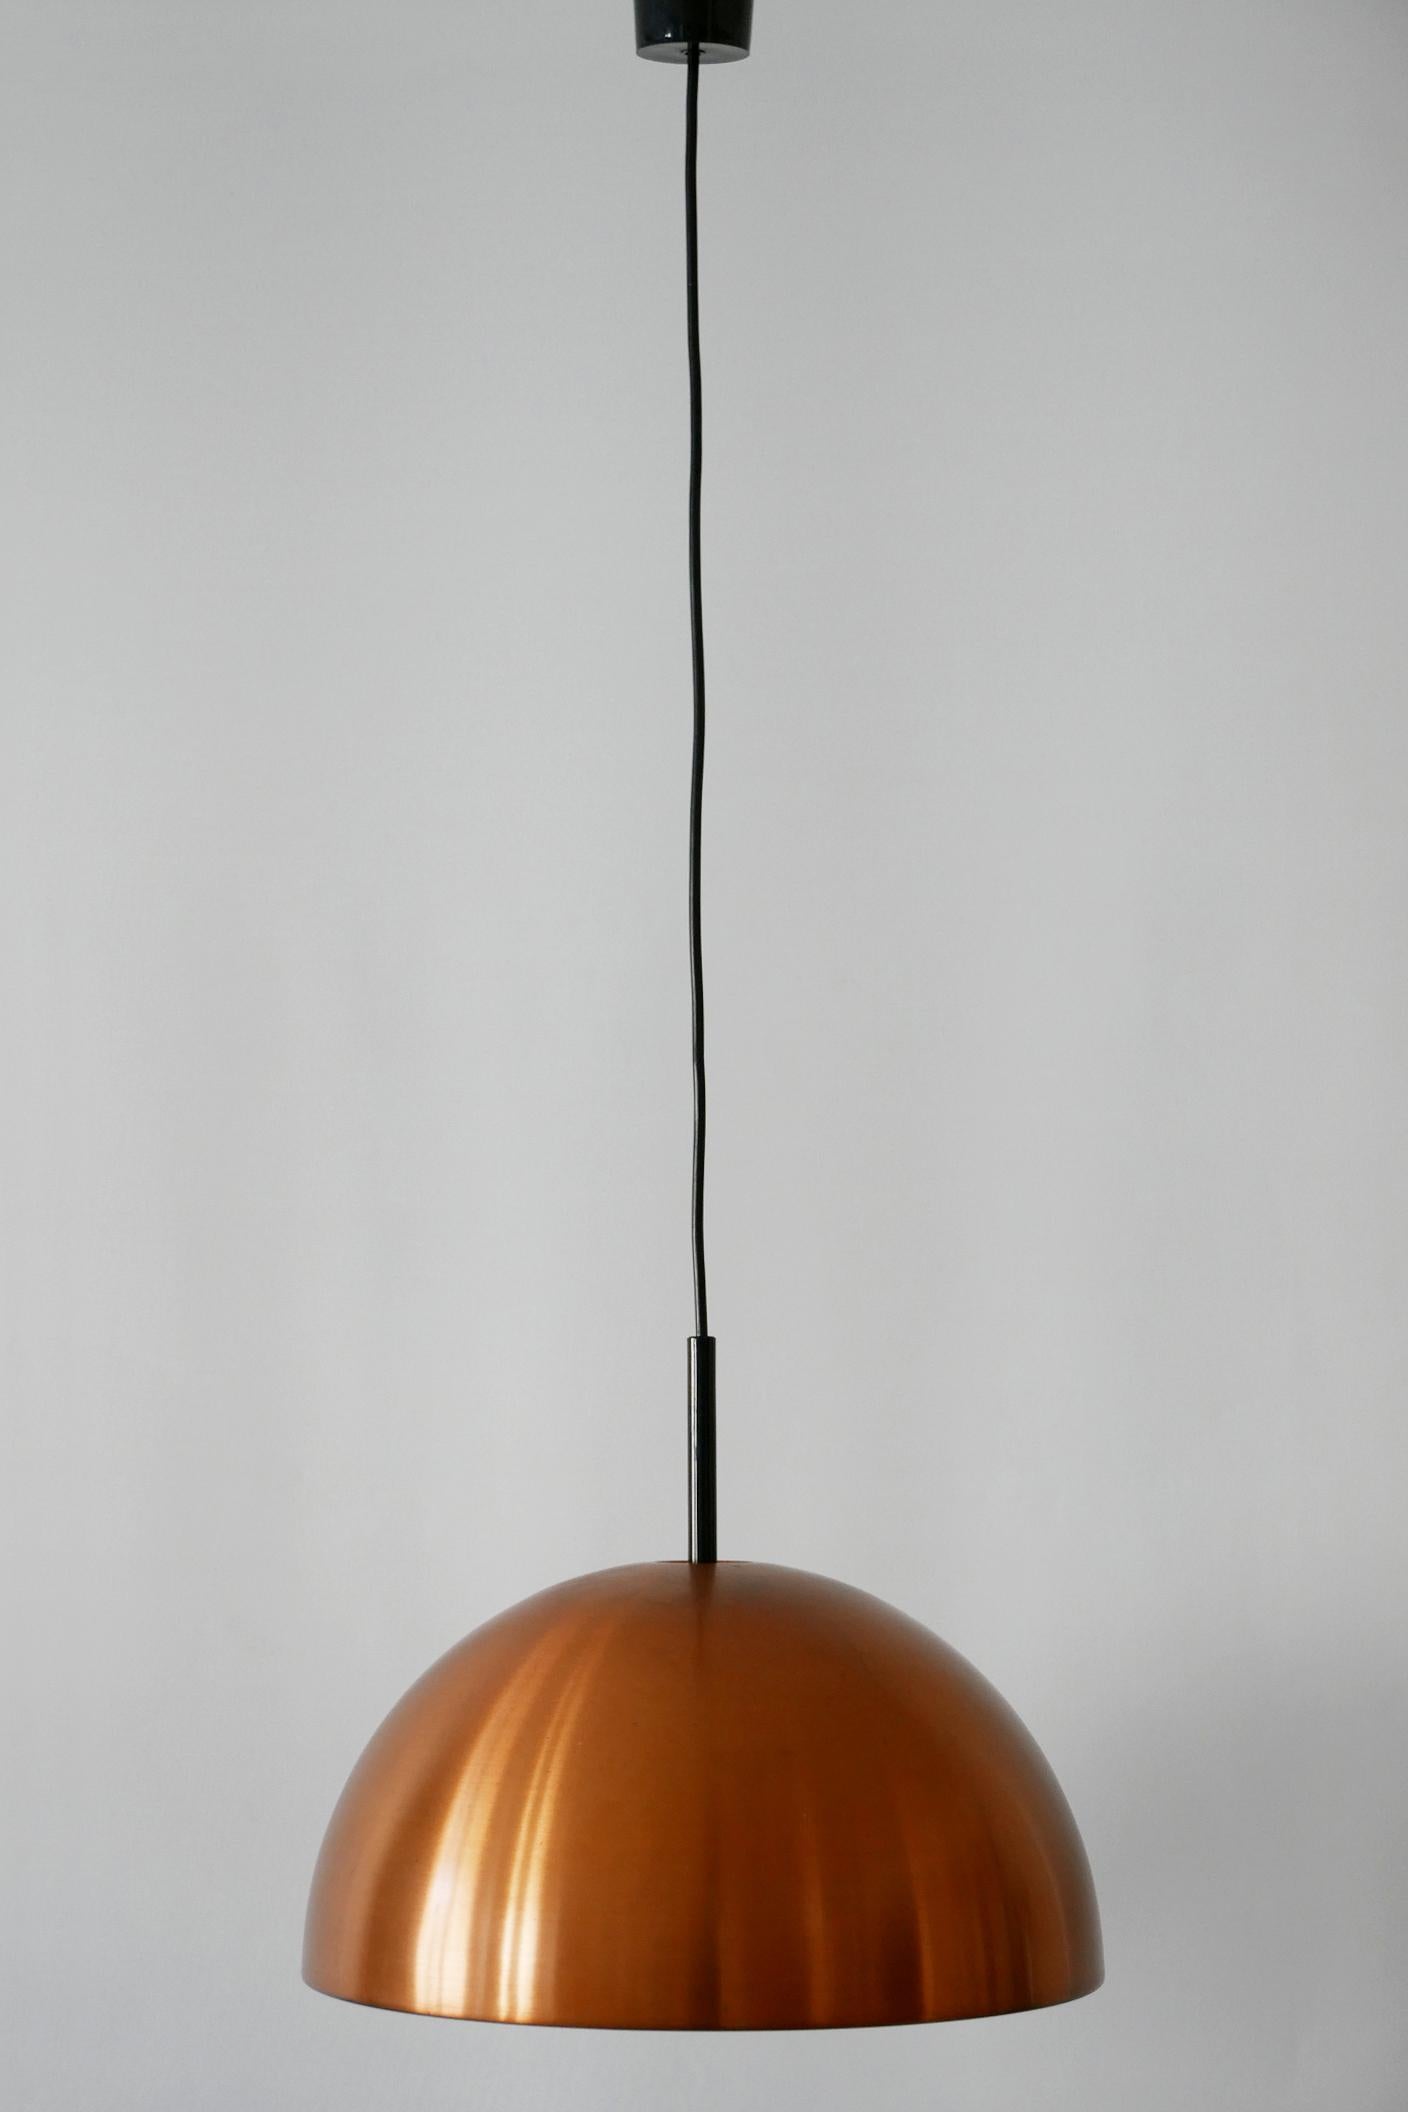 Elegant Mid-Century Modern Copper Pendant Lamp by Staff & Schwarz 1960s, Germany In Good Condition For Sale In Munich, DE